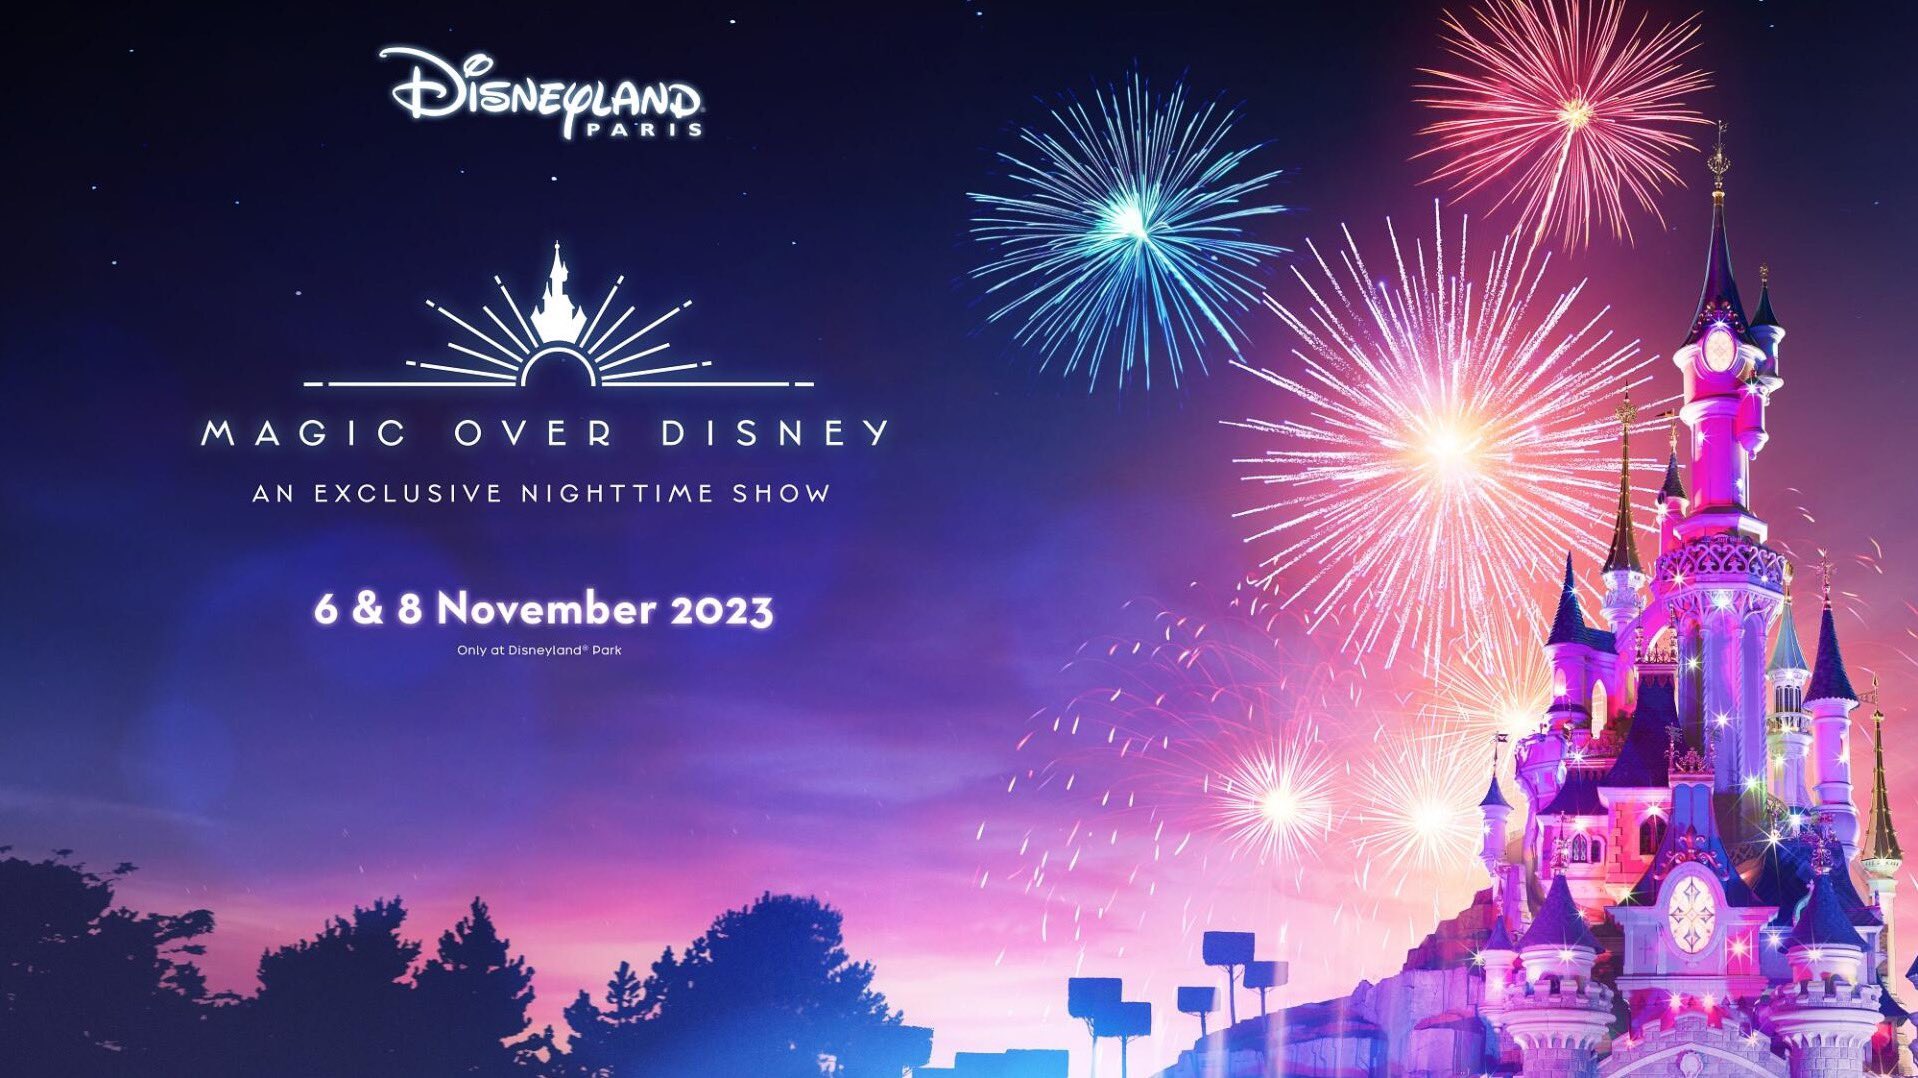 New Visuals released for Magic Over Disney at Disneyland Paris